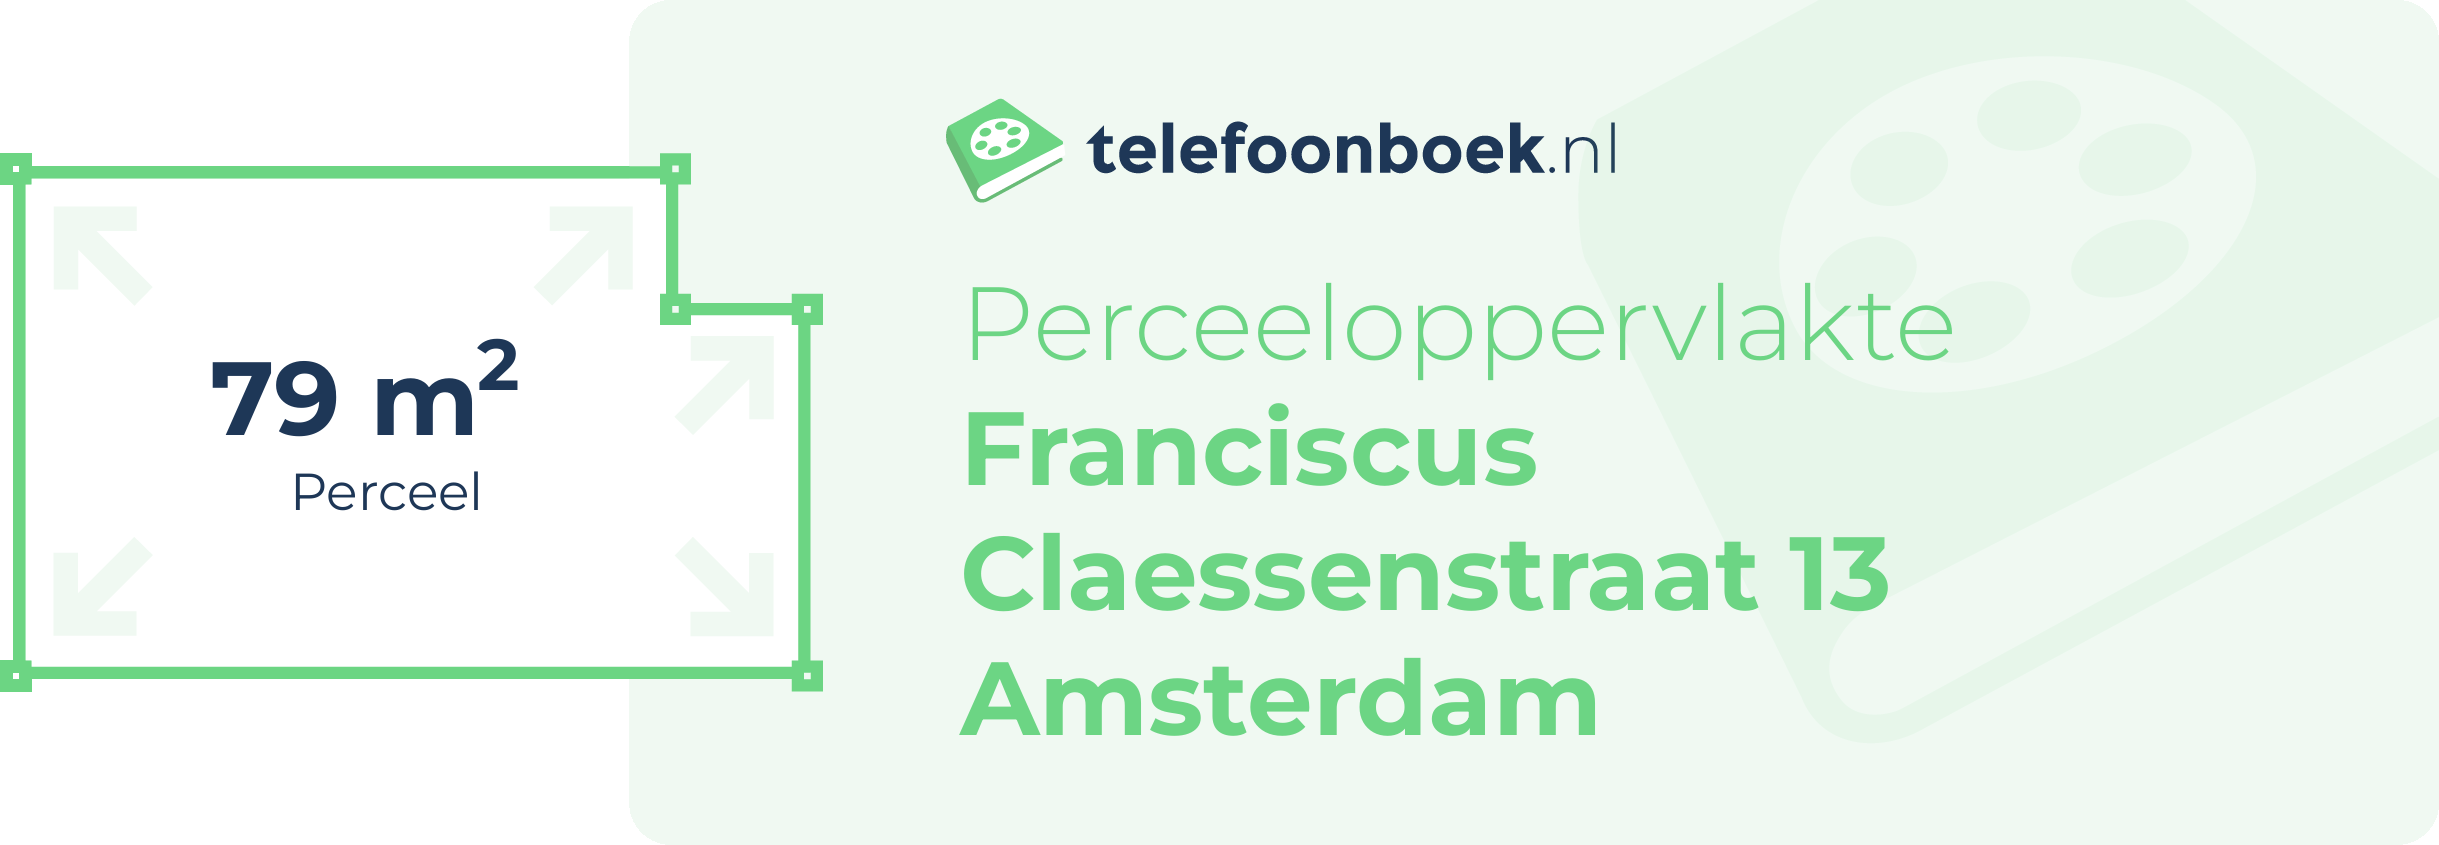 Perceeloppervlakte Franciscus Claessenstraat 13 Amsterdam